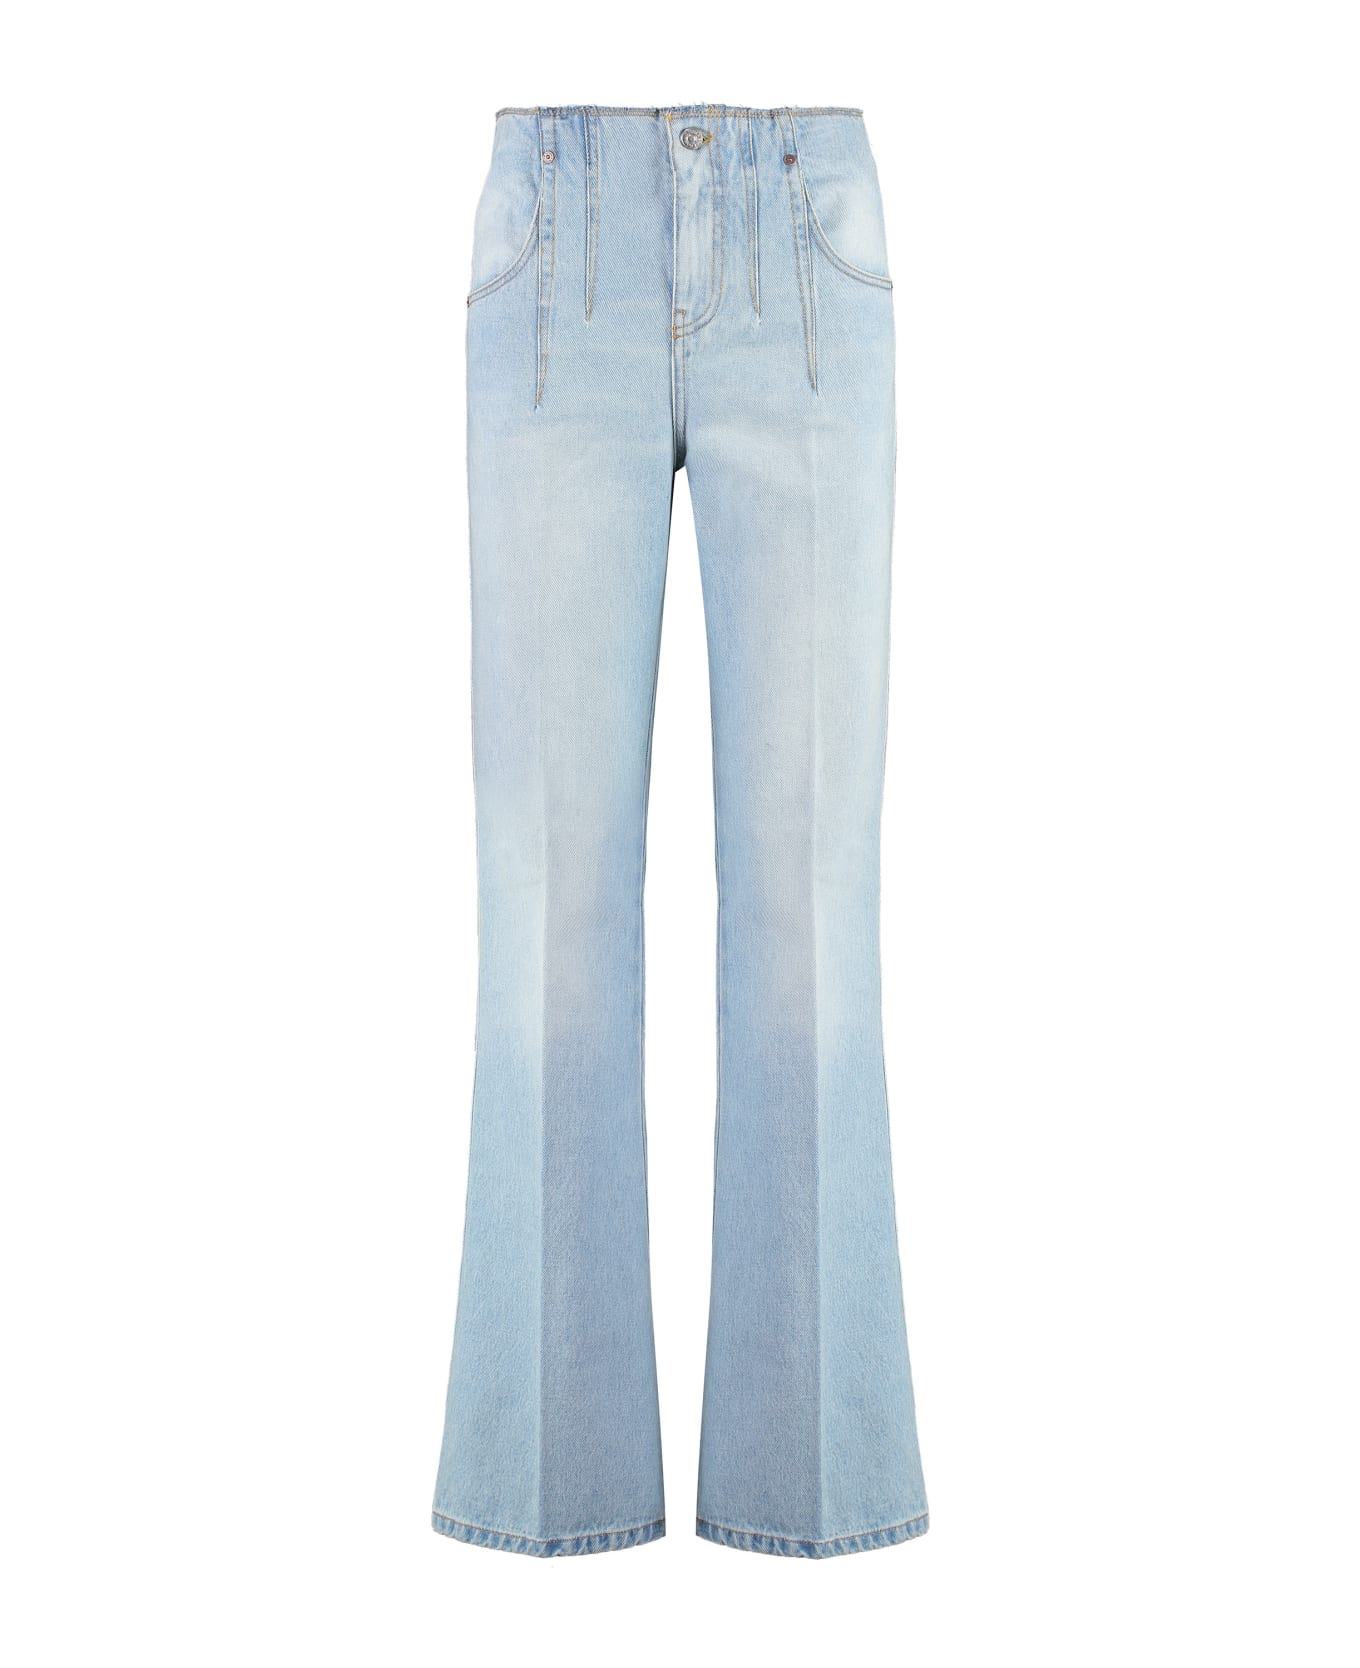 Victoria Beckham High-rise Flared Jeans - Denim デニム